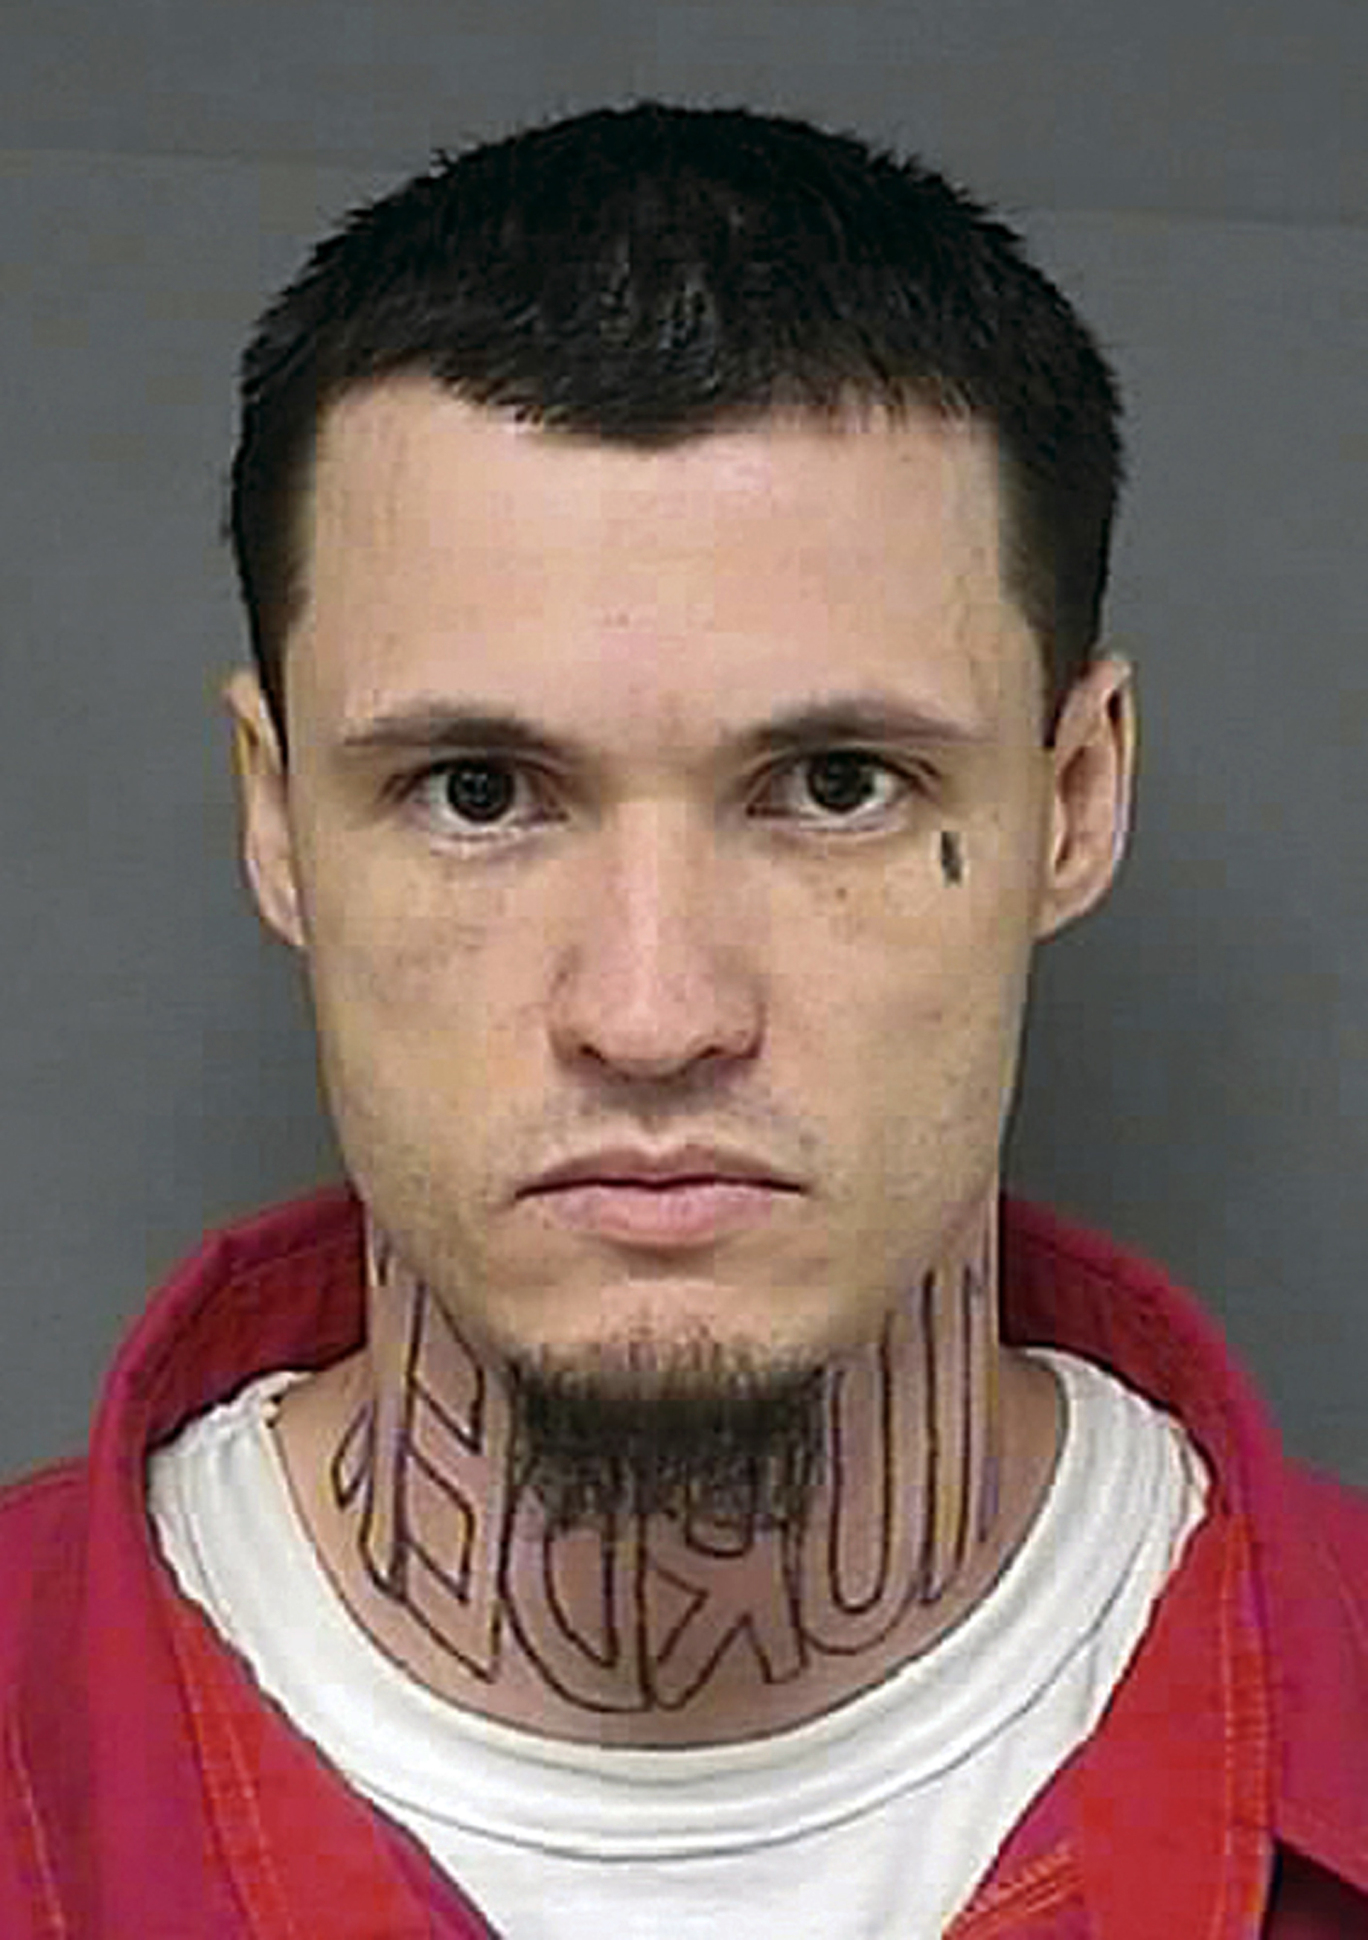 Tattoo Artist Questioned In Aaron Hernandez Murder Trial - CBS Boston